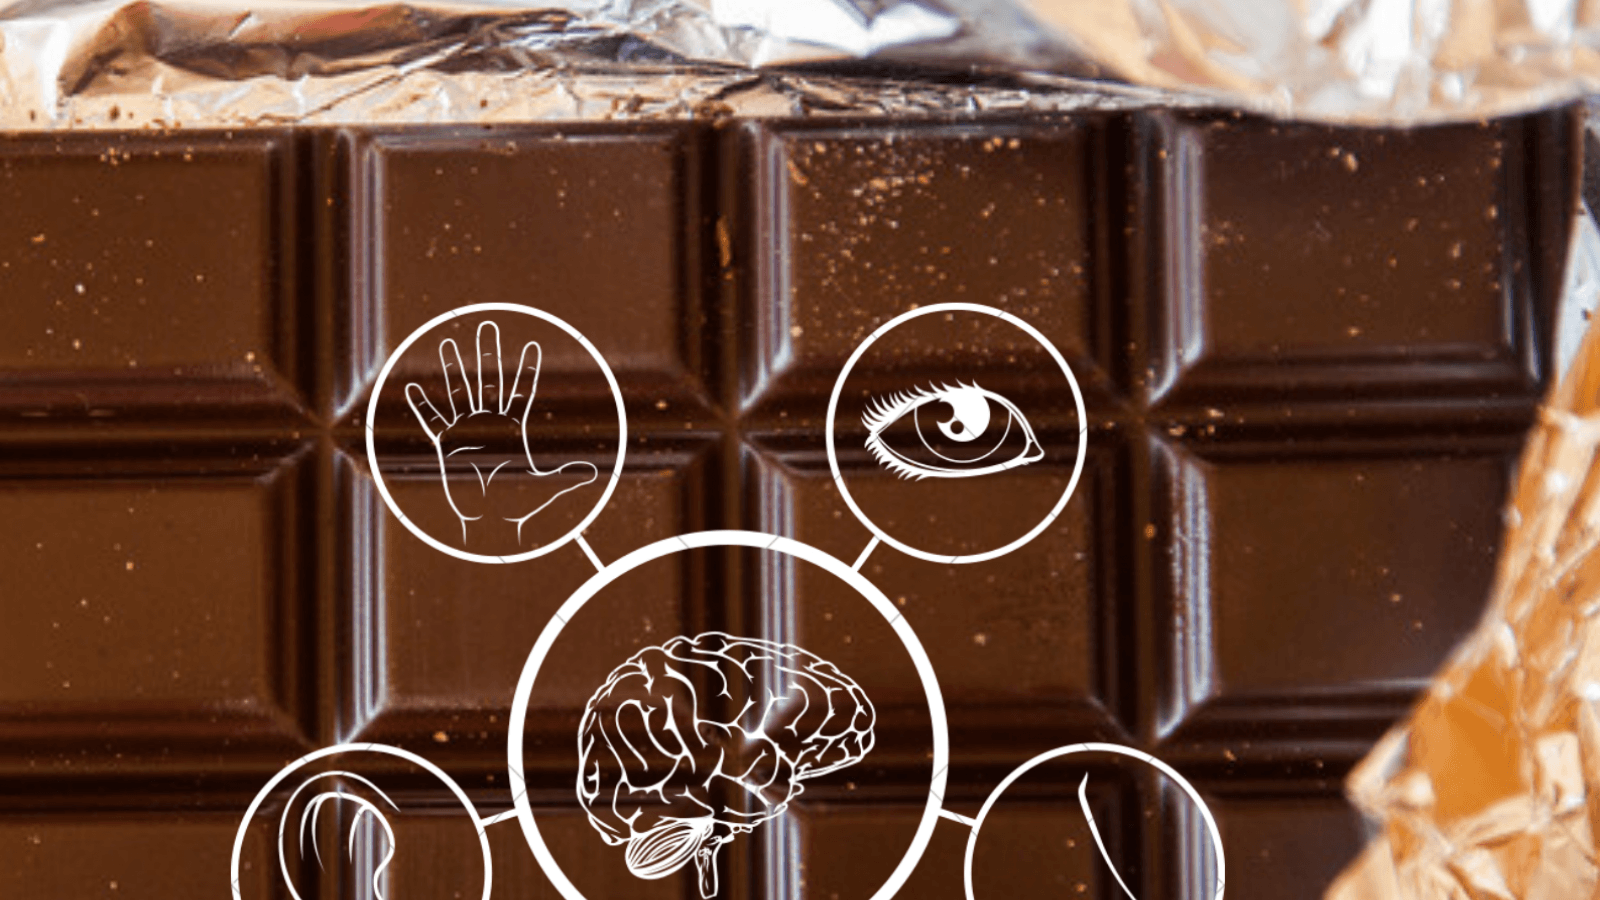 Sophrologie & Chocolat, découverte de nos 5 sens